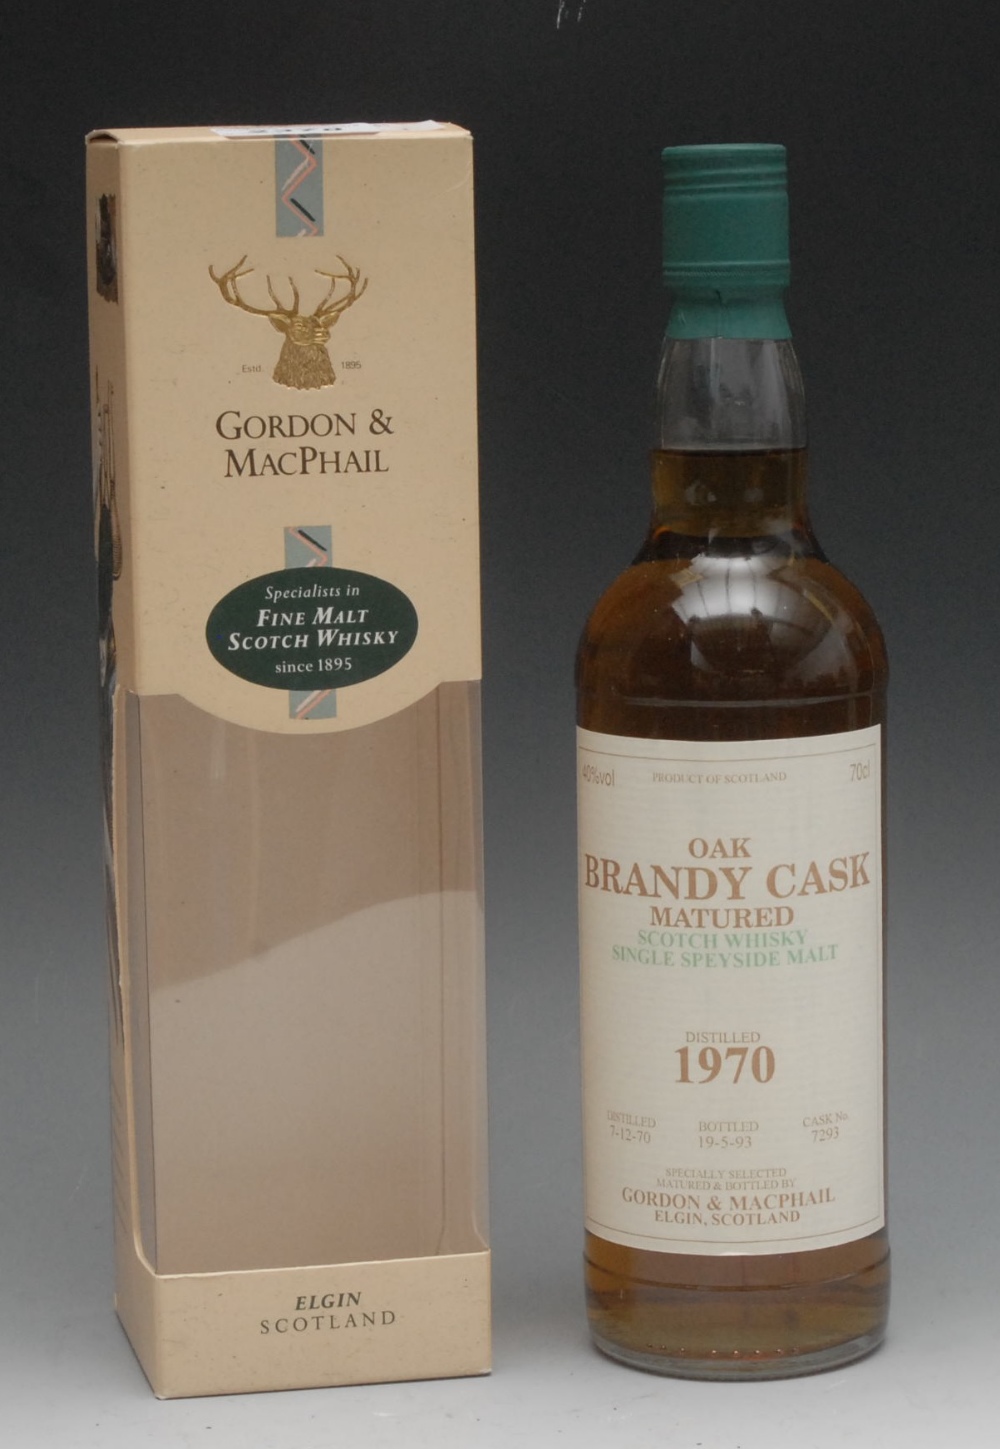 Gordon & MacPhail Oak Brandy Cask Matured Single Speyside Scotch Whisky, Distilled 1970 (7-12-70),